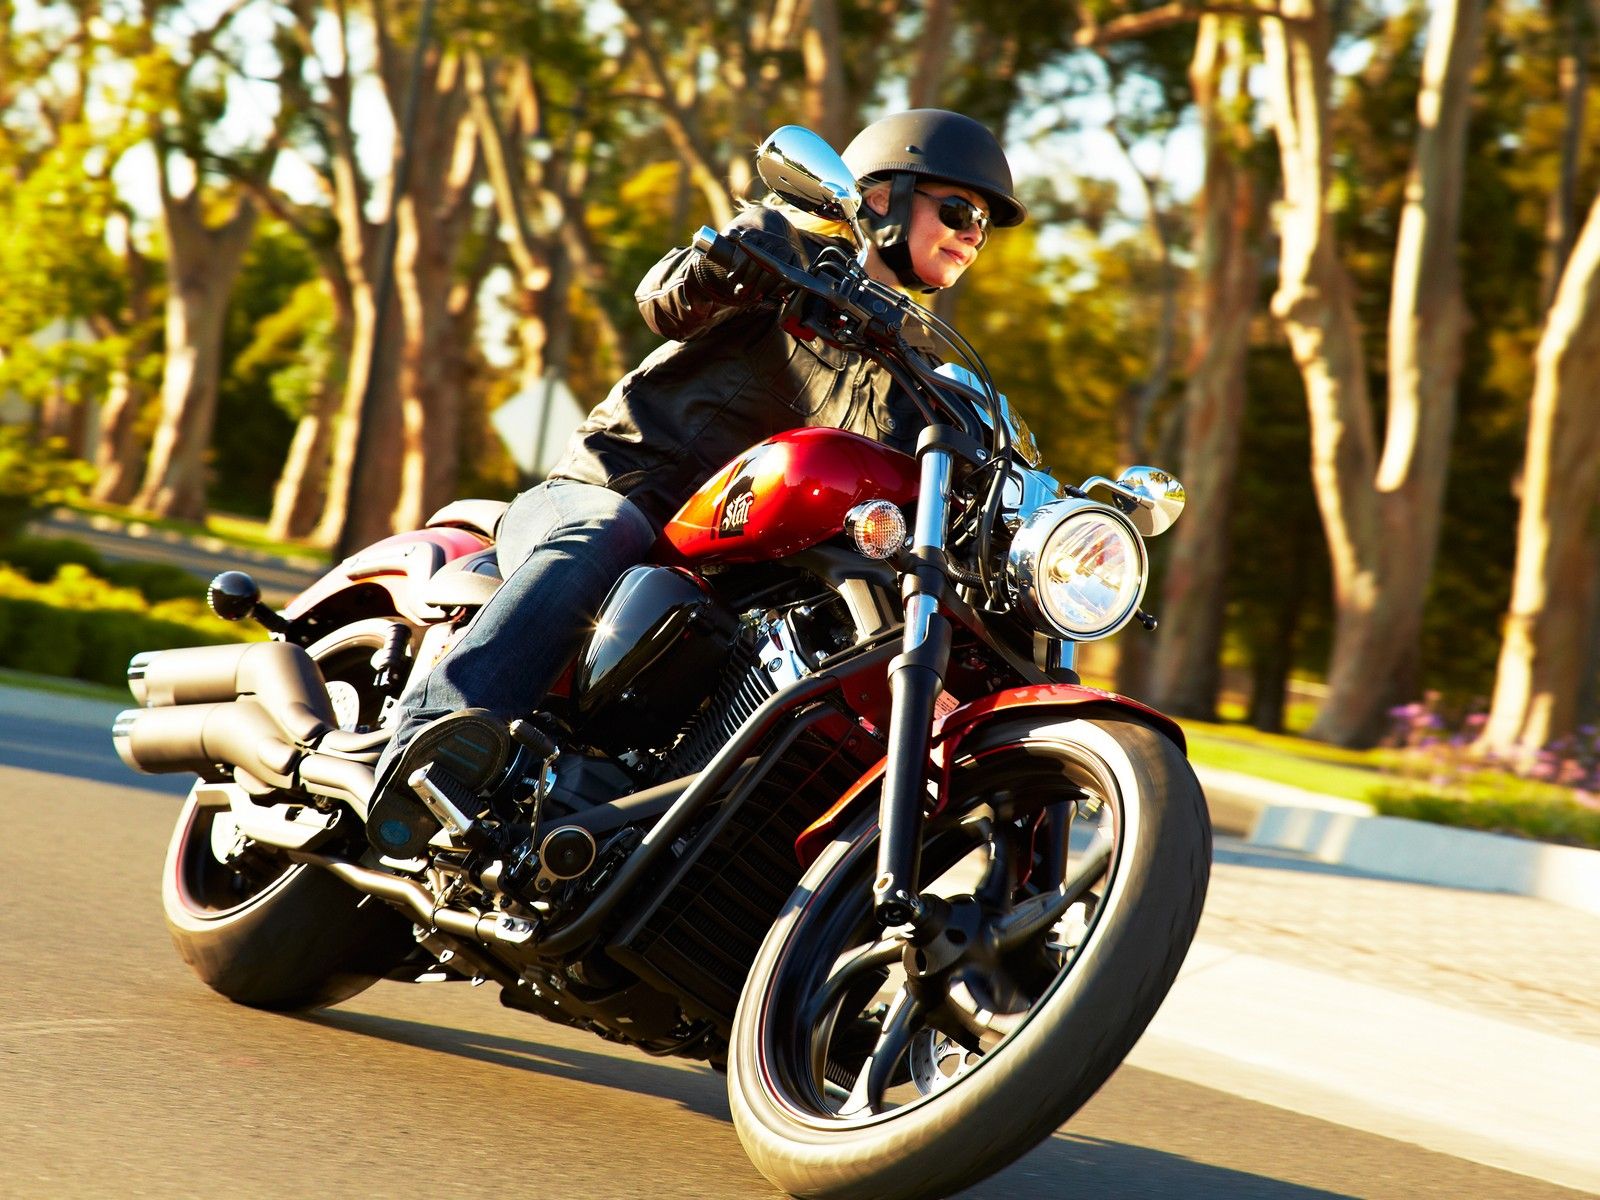 2013 Star Motorcycle Stryker